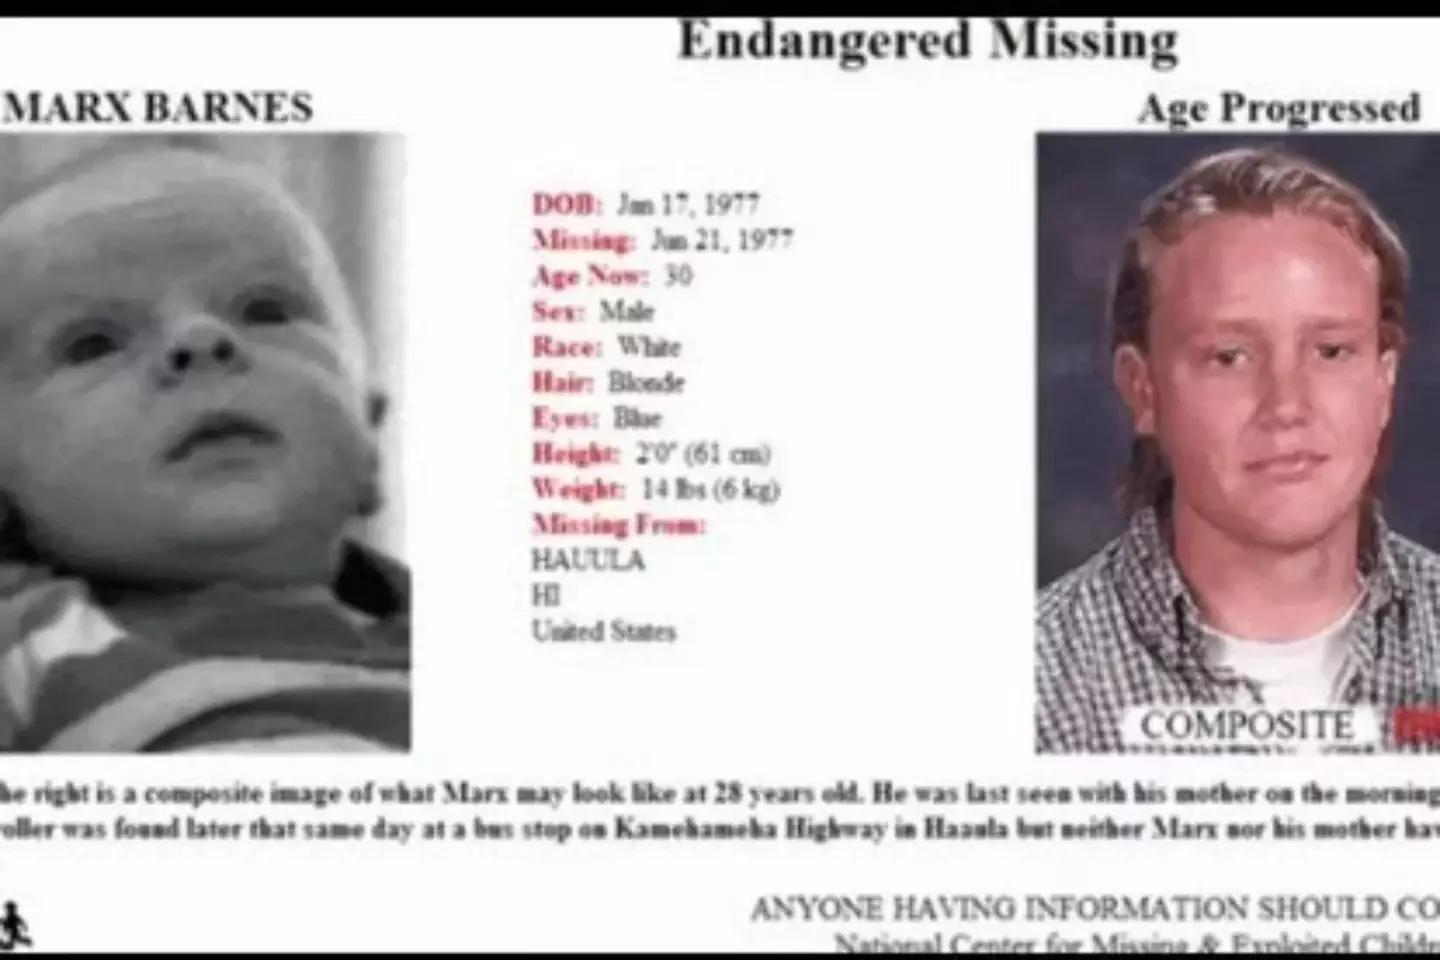 The poster Steve found on the missing children's website. (MissingKids.com)